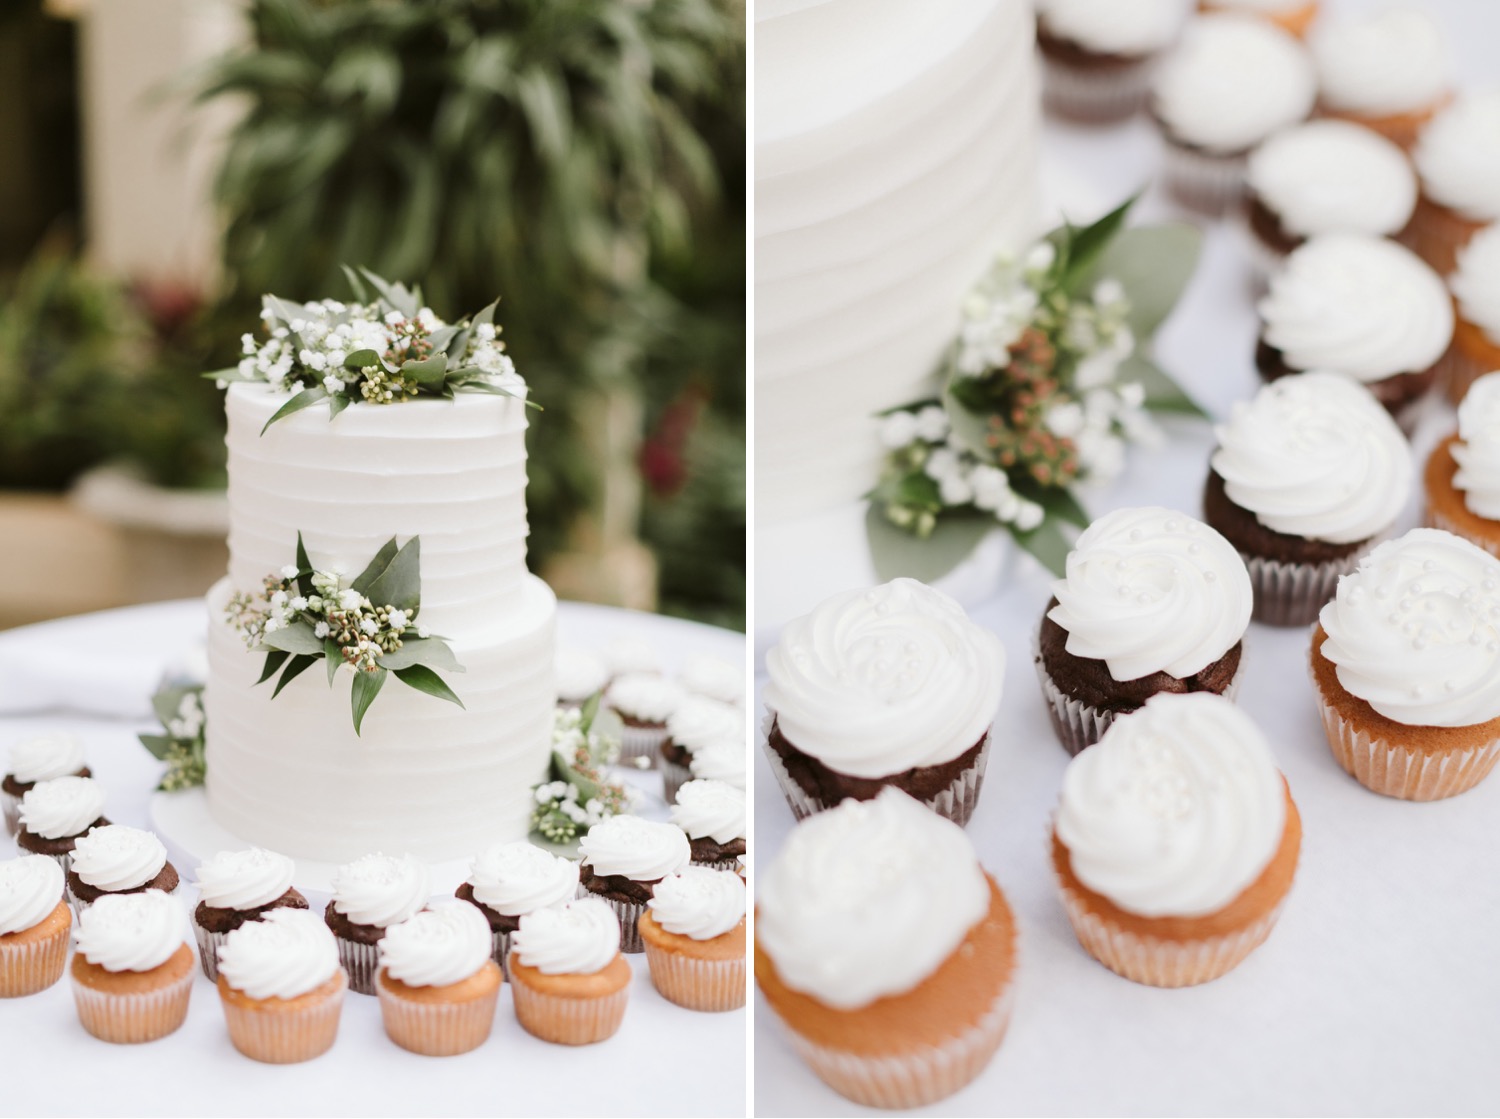 Julia_Hawaii_Cake_Honolulu_Wedding_Cafe_dessert_reception_Cupcakes.jpg